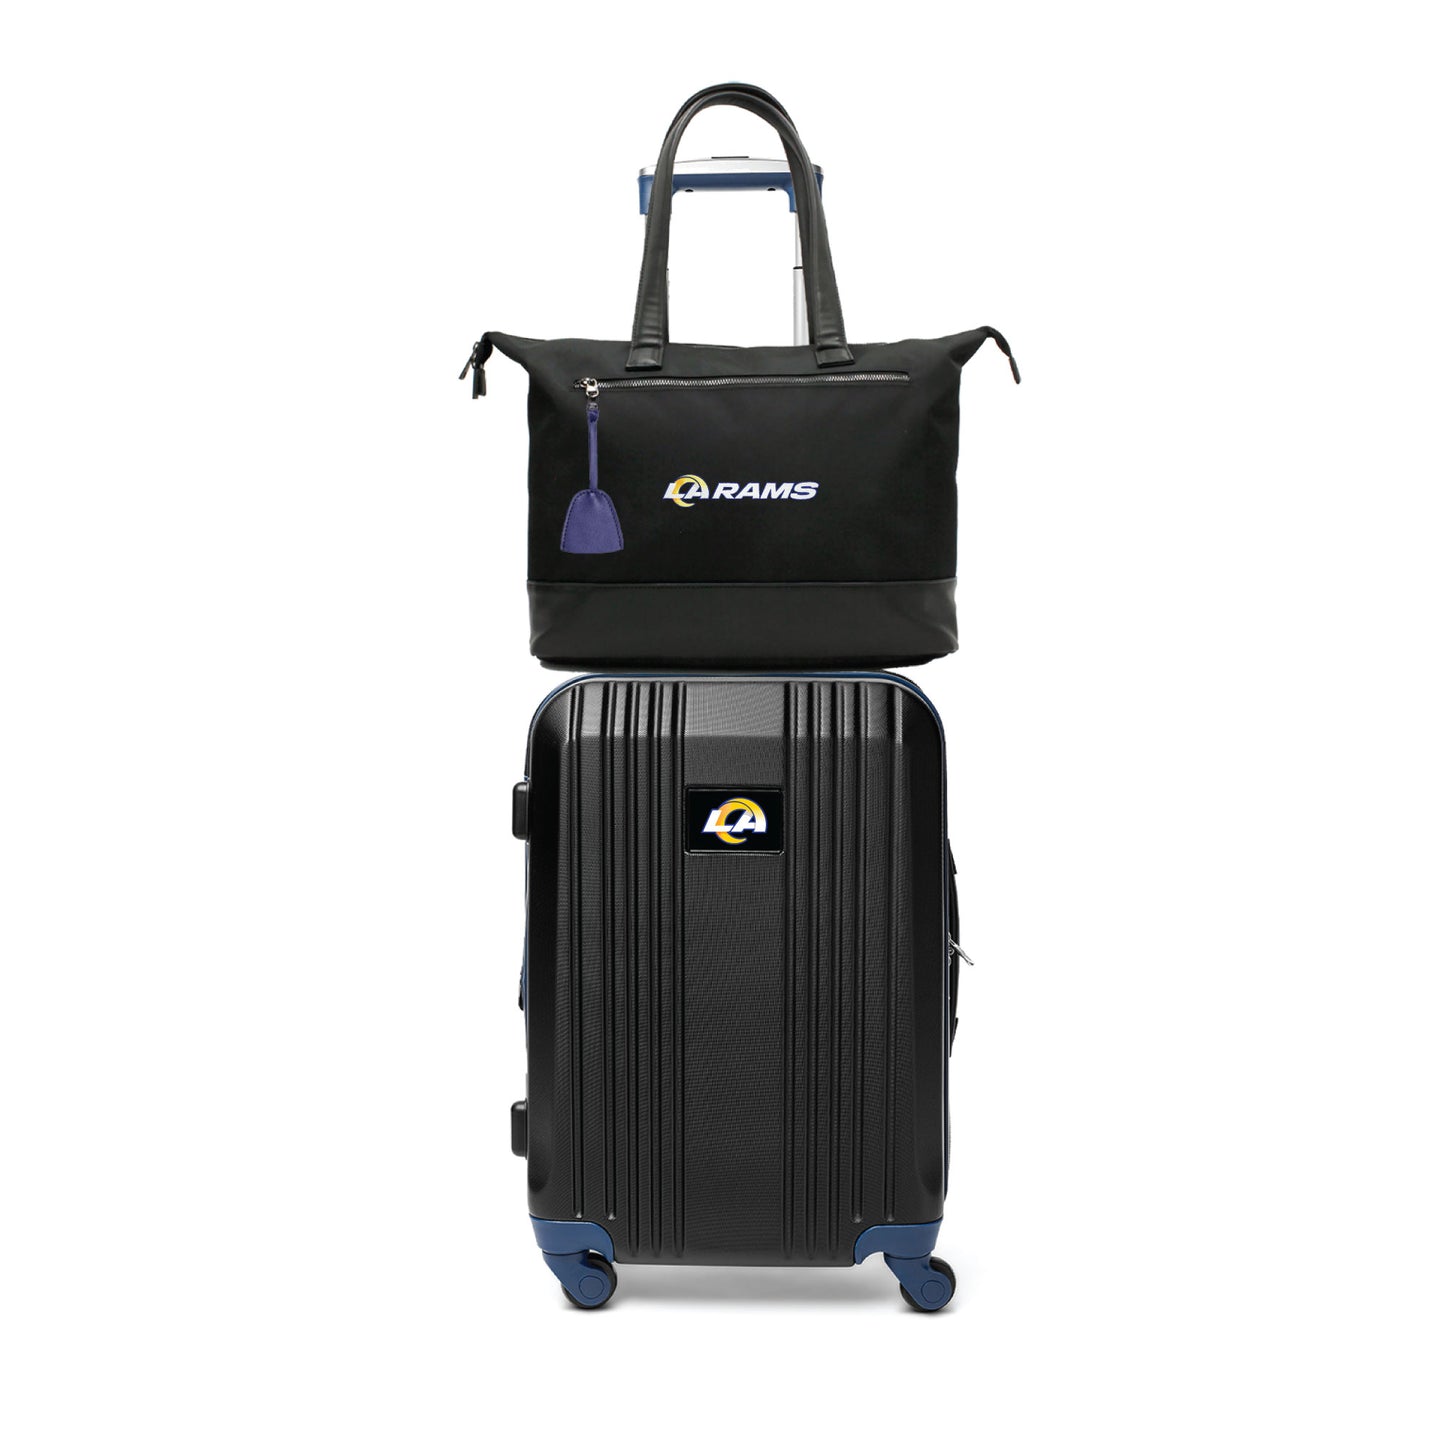 Los Angeles Rams Premium Laptop Tote Bag and Luggage Set